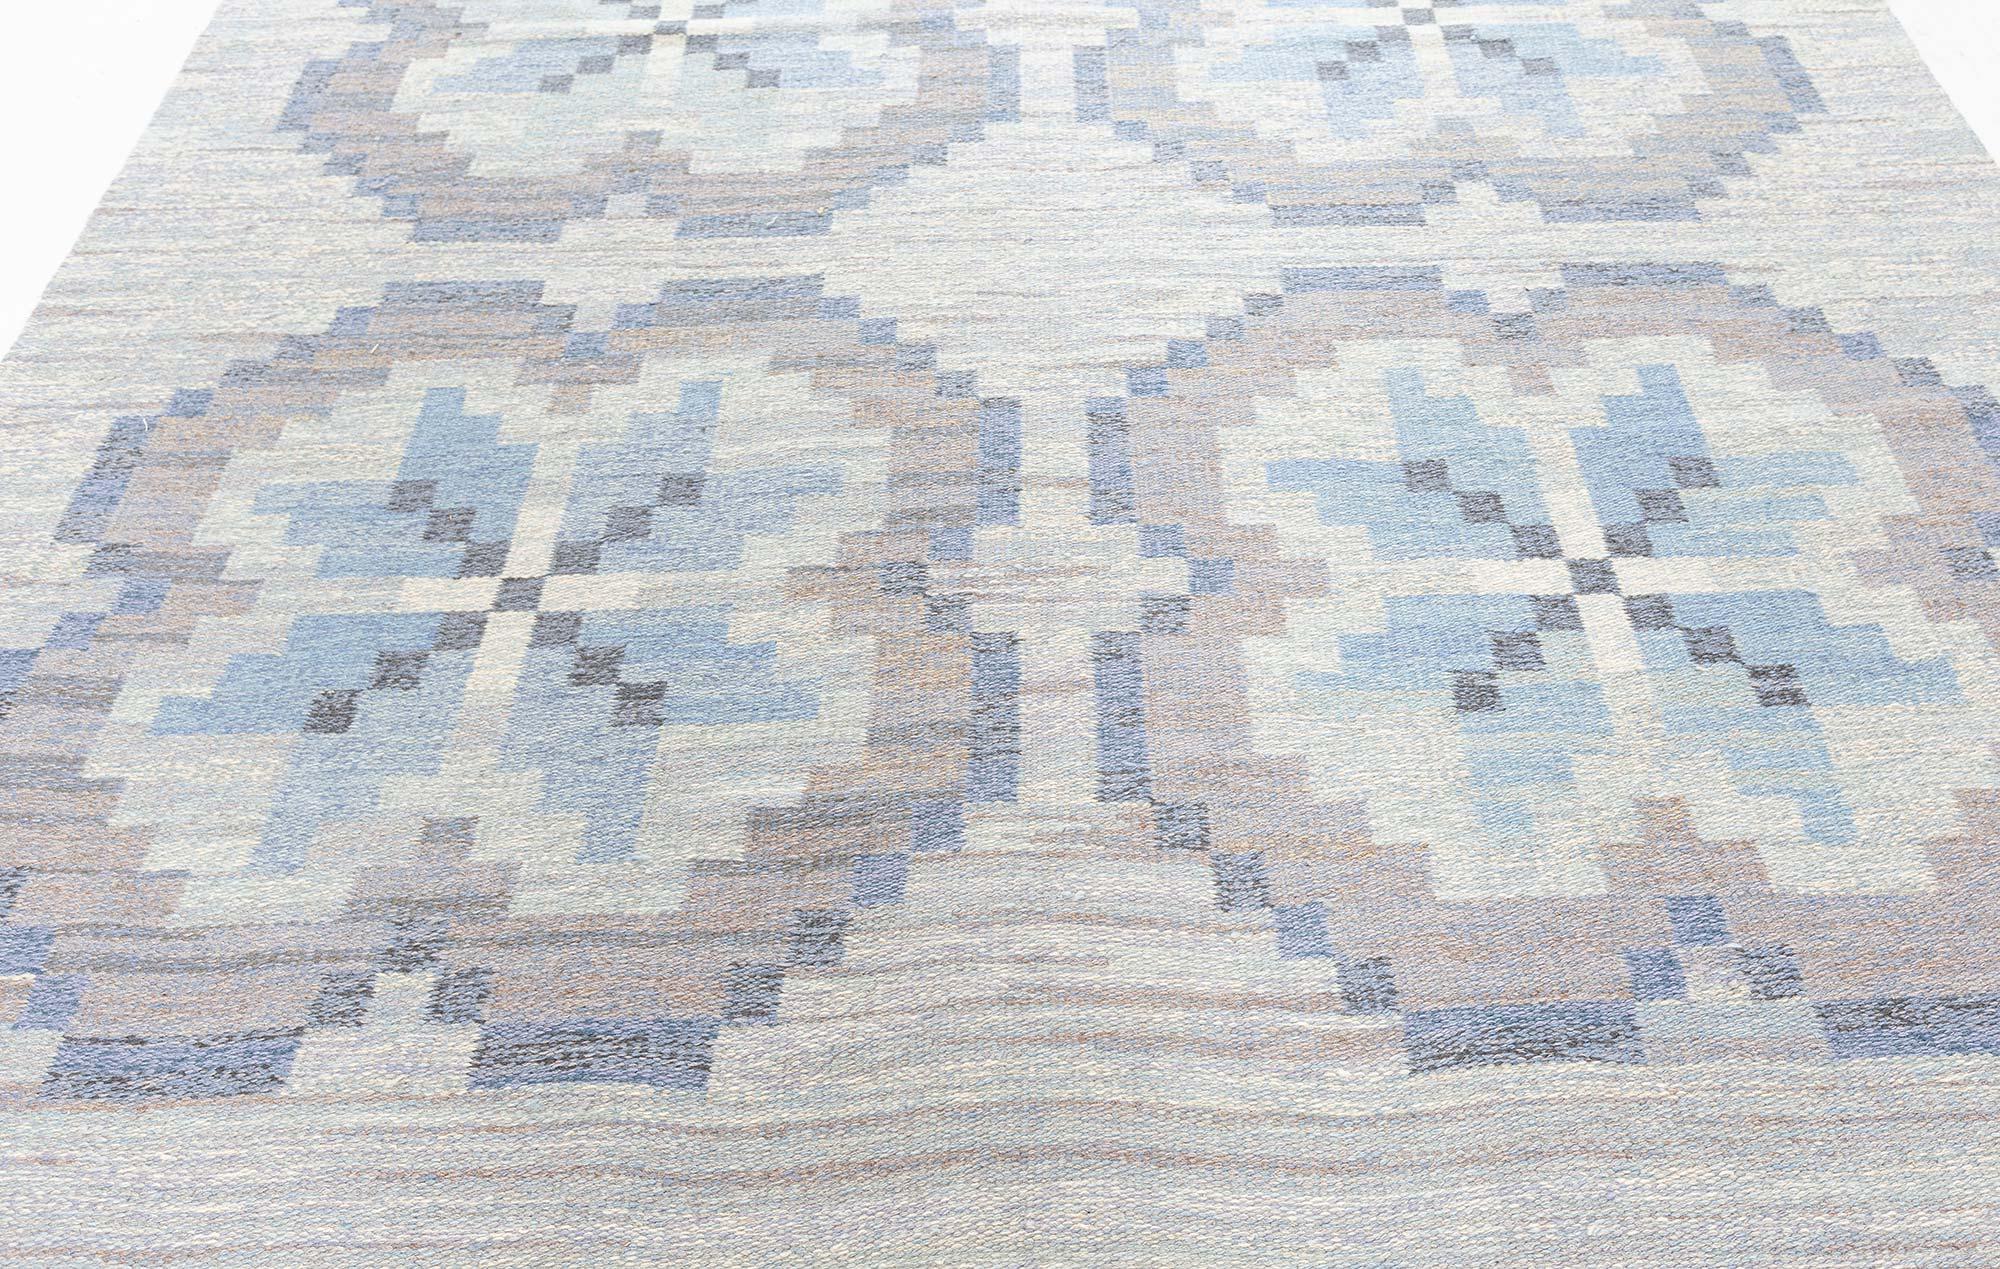 Mid-20th century Swedish Rolakan blue rug by Ingegerd Silow
Size: 6'9